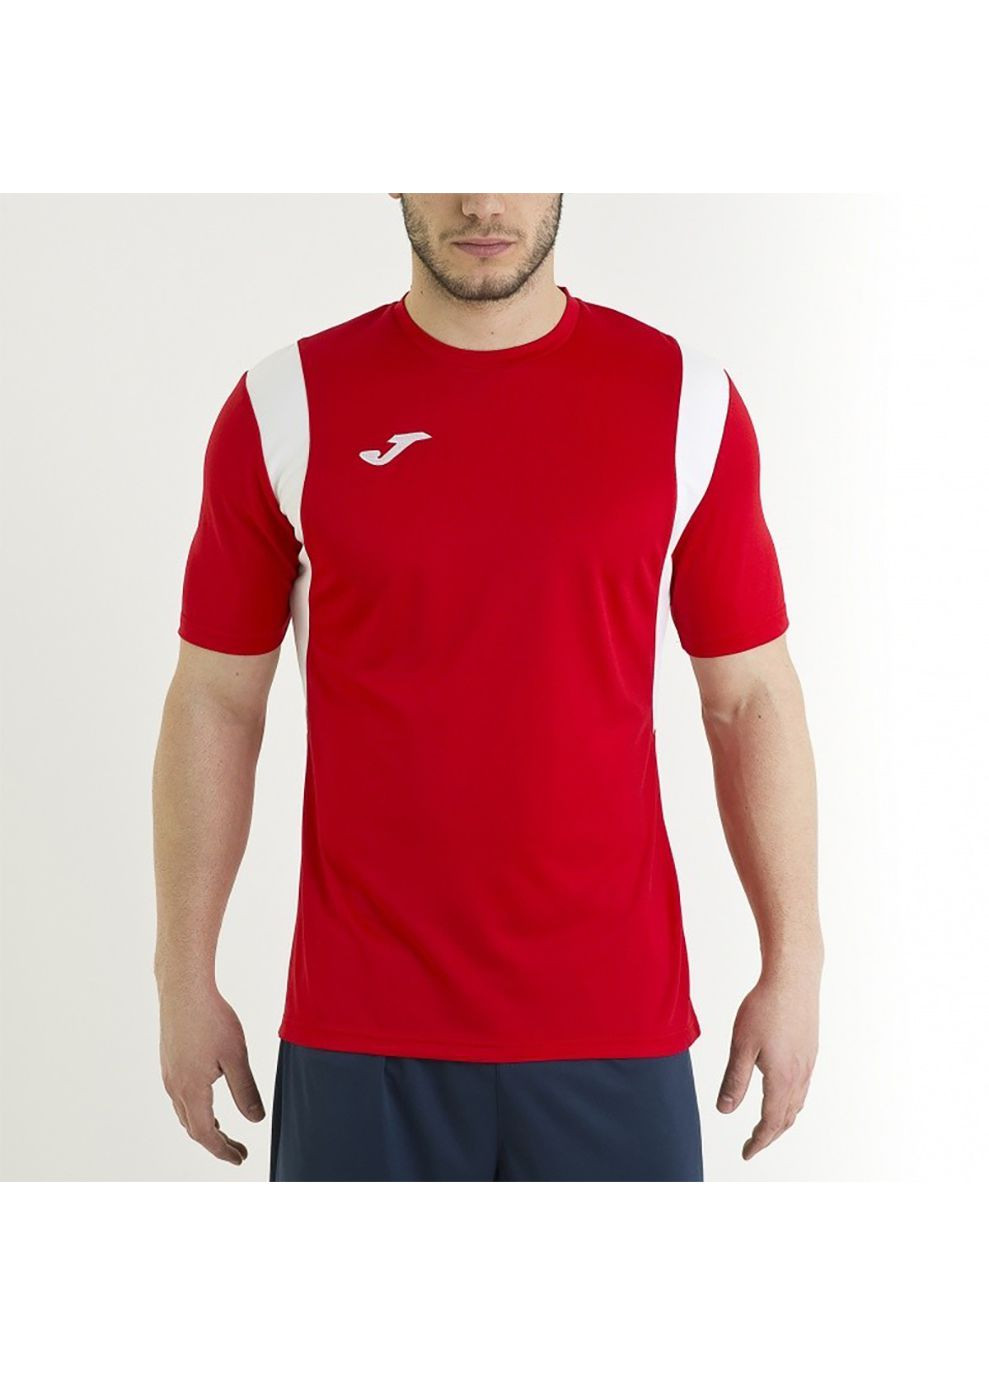 Красная футболка t-shirt dinamo red s/s красный 100446.600 Joma